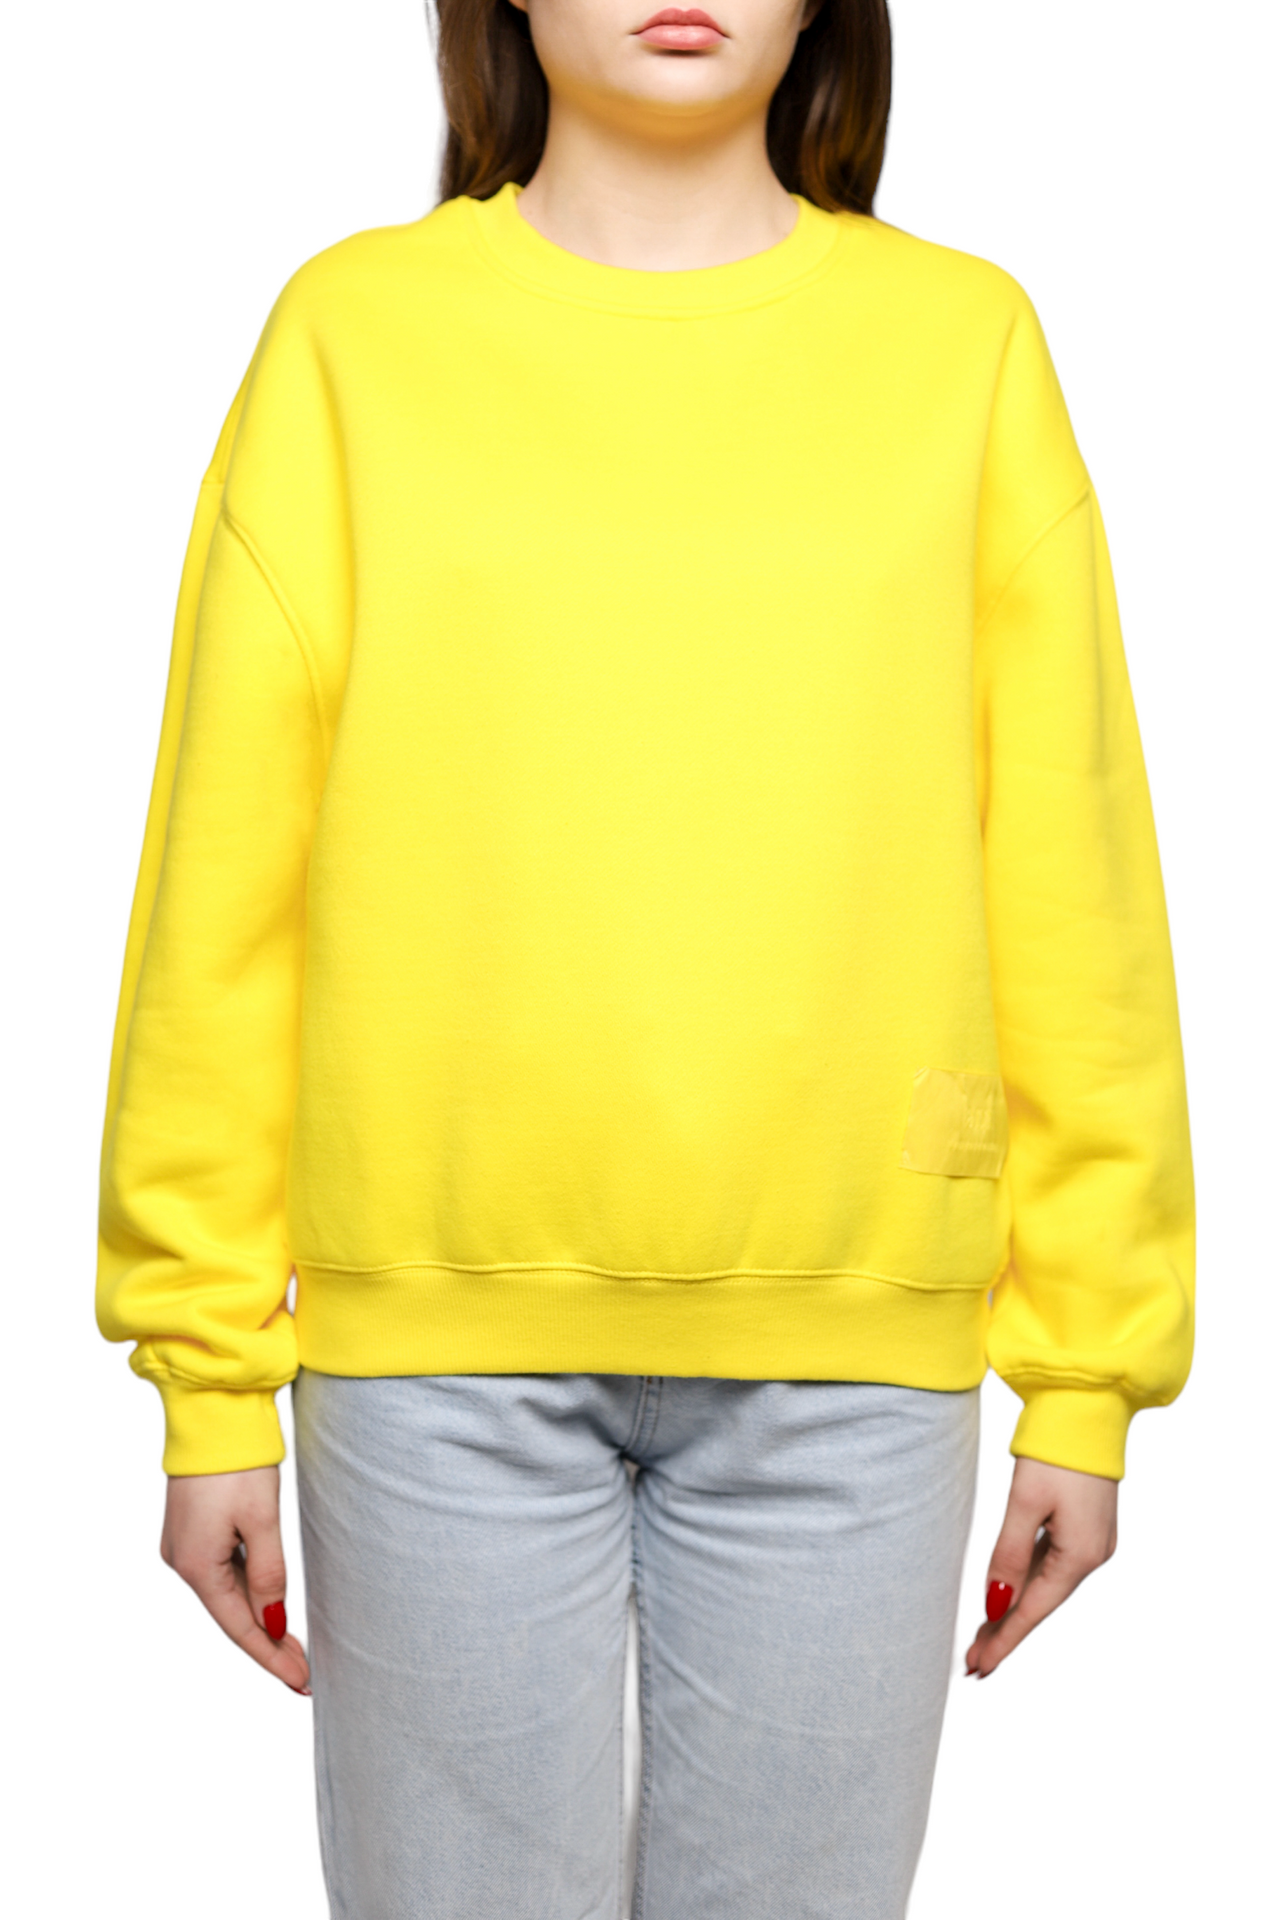 AMI Paris Sweatshirt Satin Label Yellow